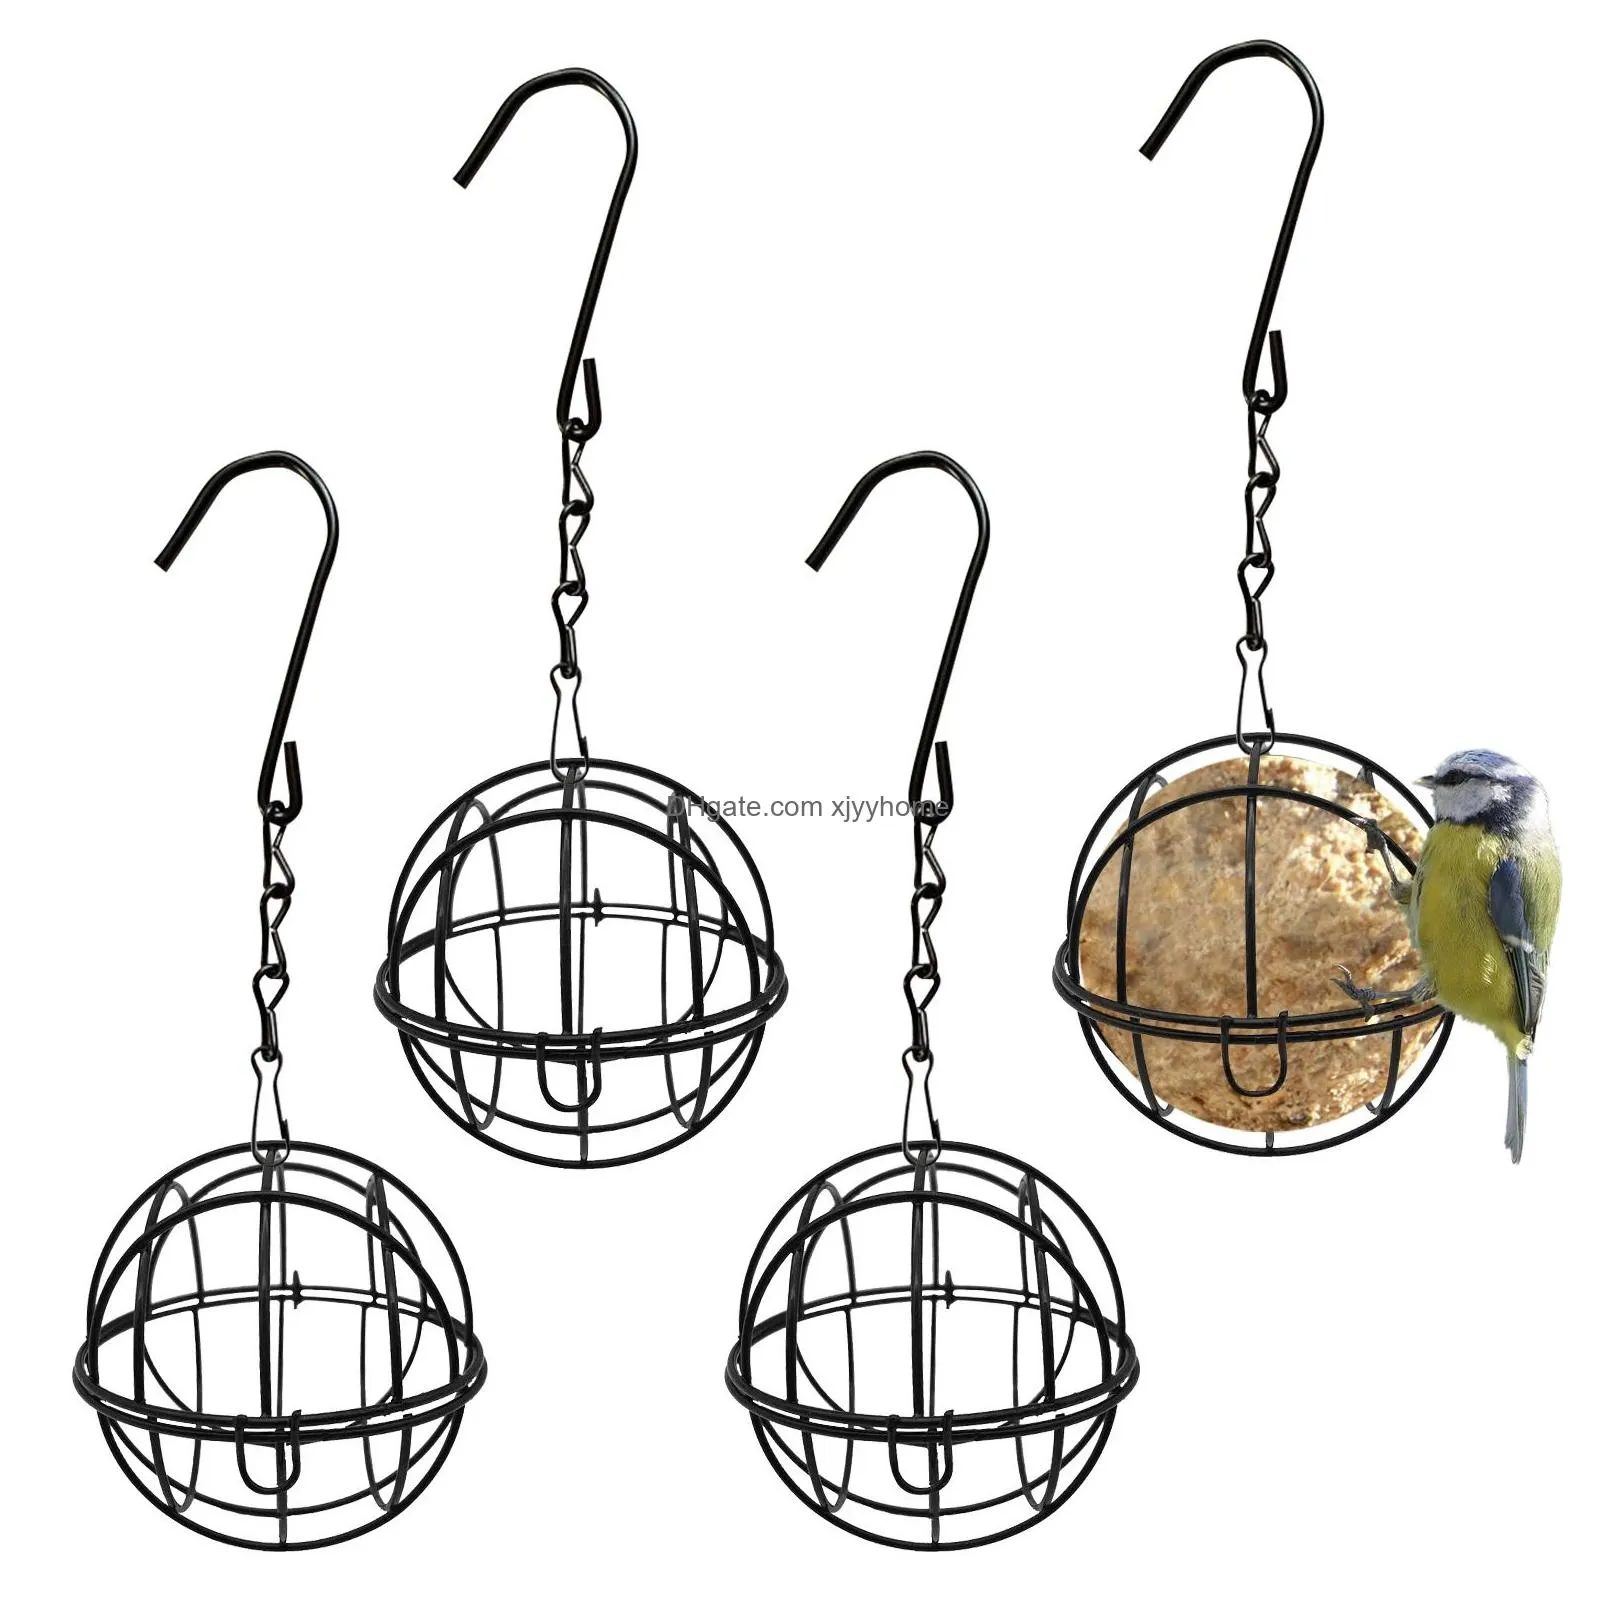 Other Bird Supplies Feeding 4Pcs Wildlife Finch Home Garden Fat Ball Black Iron Rustproof For Outdoor Hanging Sparrow Feeder With 4 Dr Dh6Xu